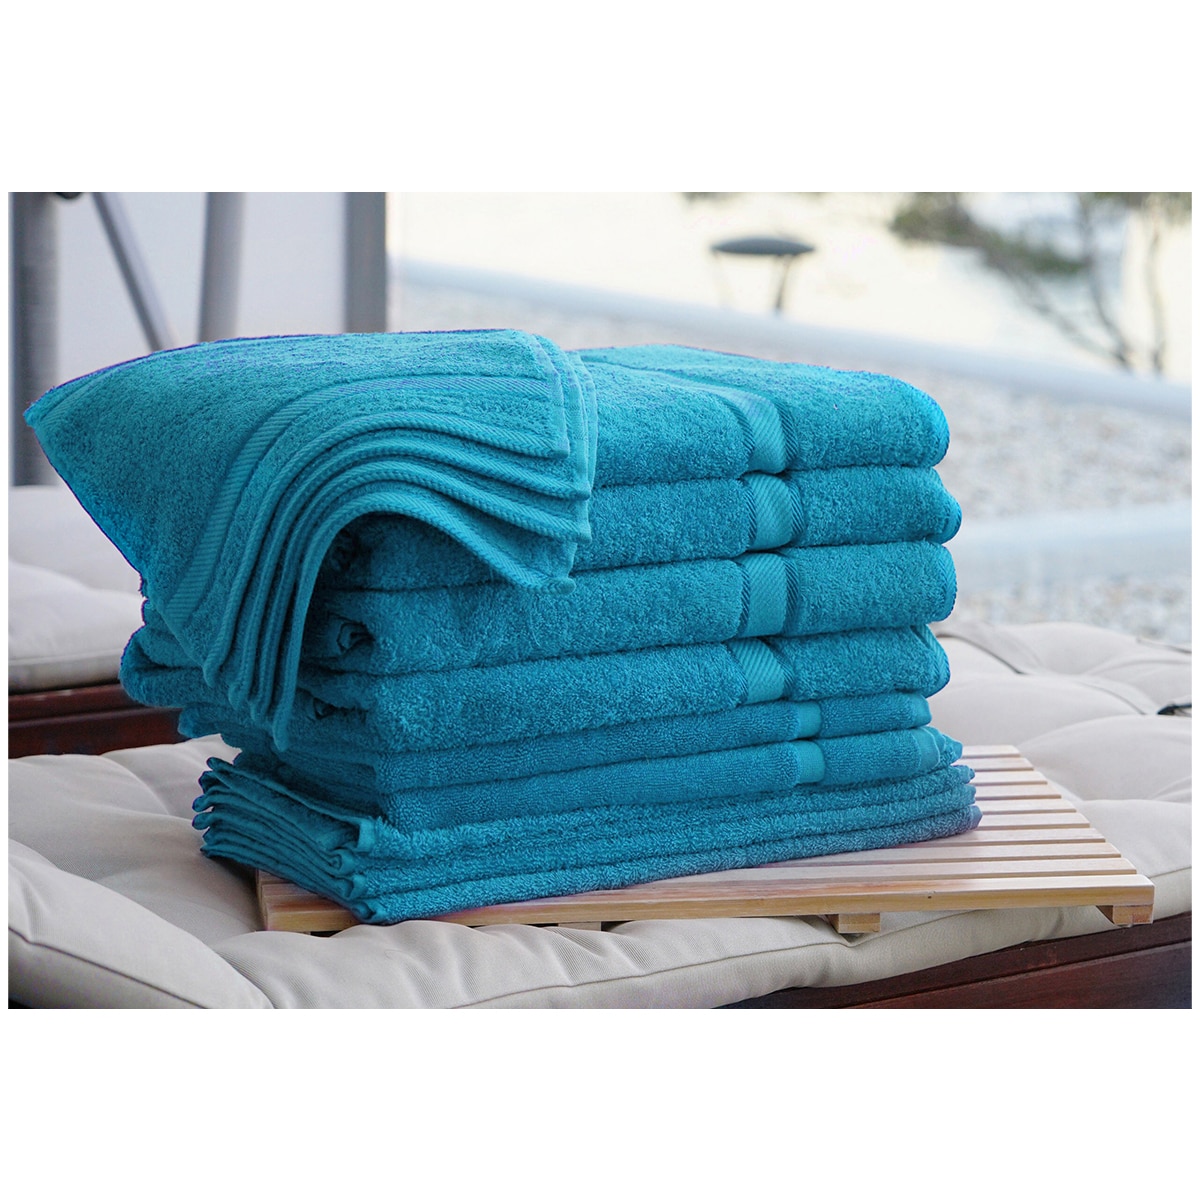 Kingtex Plain dyed 100% Combed Cotton towel range 550gsm Bath Sheet set 14 piece - Aqua